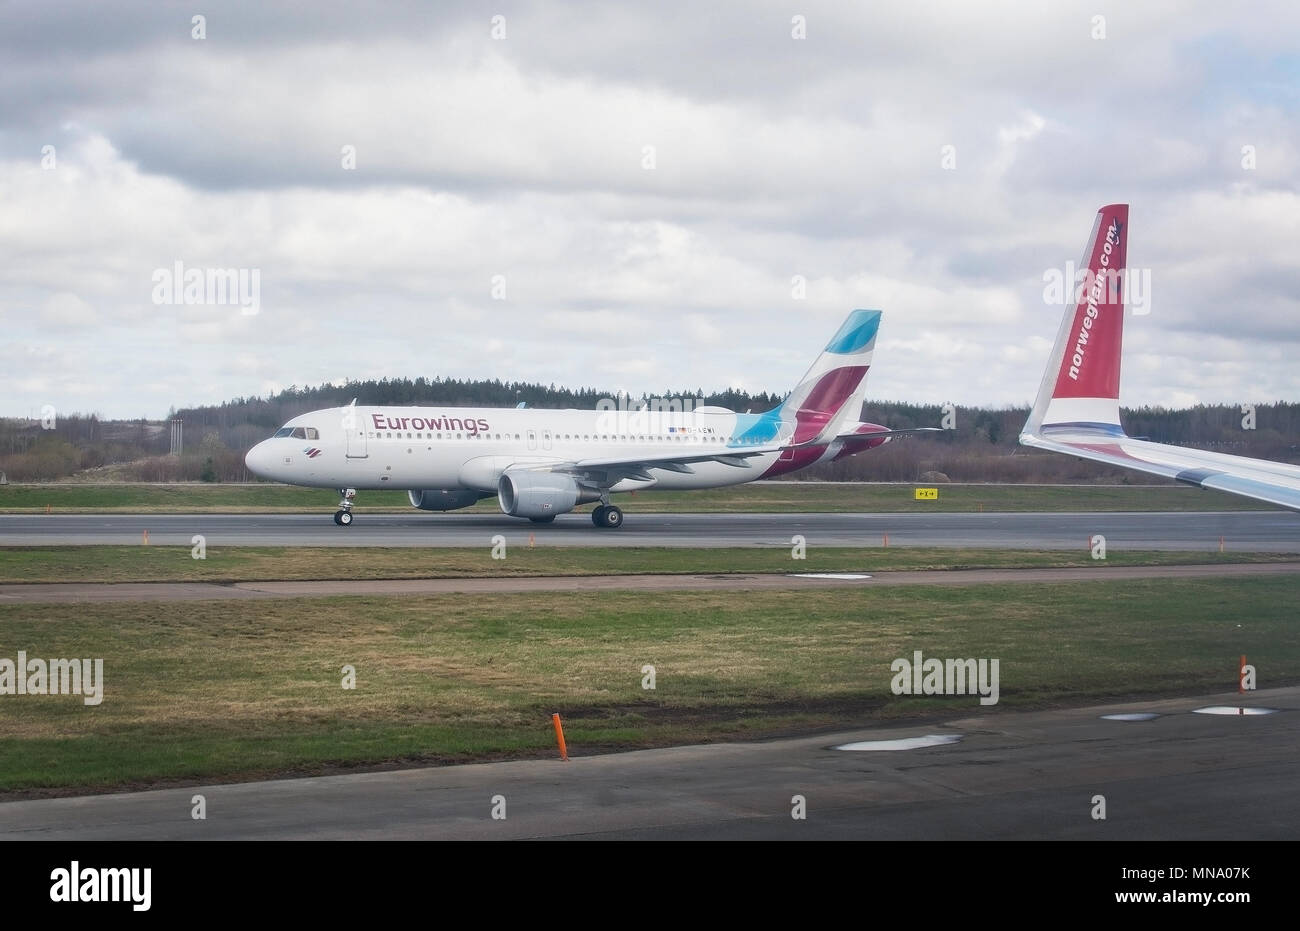 STOCKHOLM, SWEDEN - APRIL 27, 2018: Arlanda airport tarmac and Eurowings aircraft leaving Stock Photo